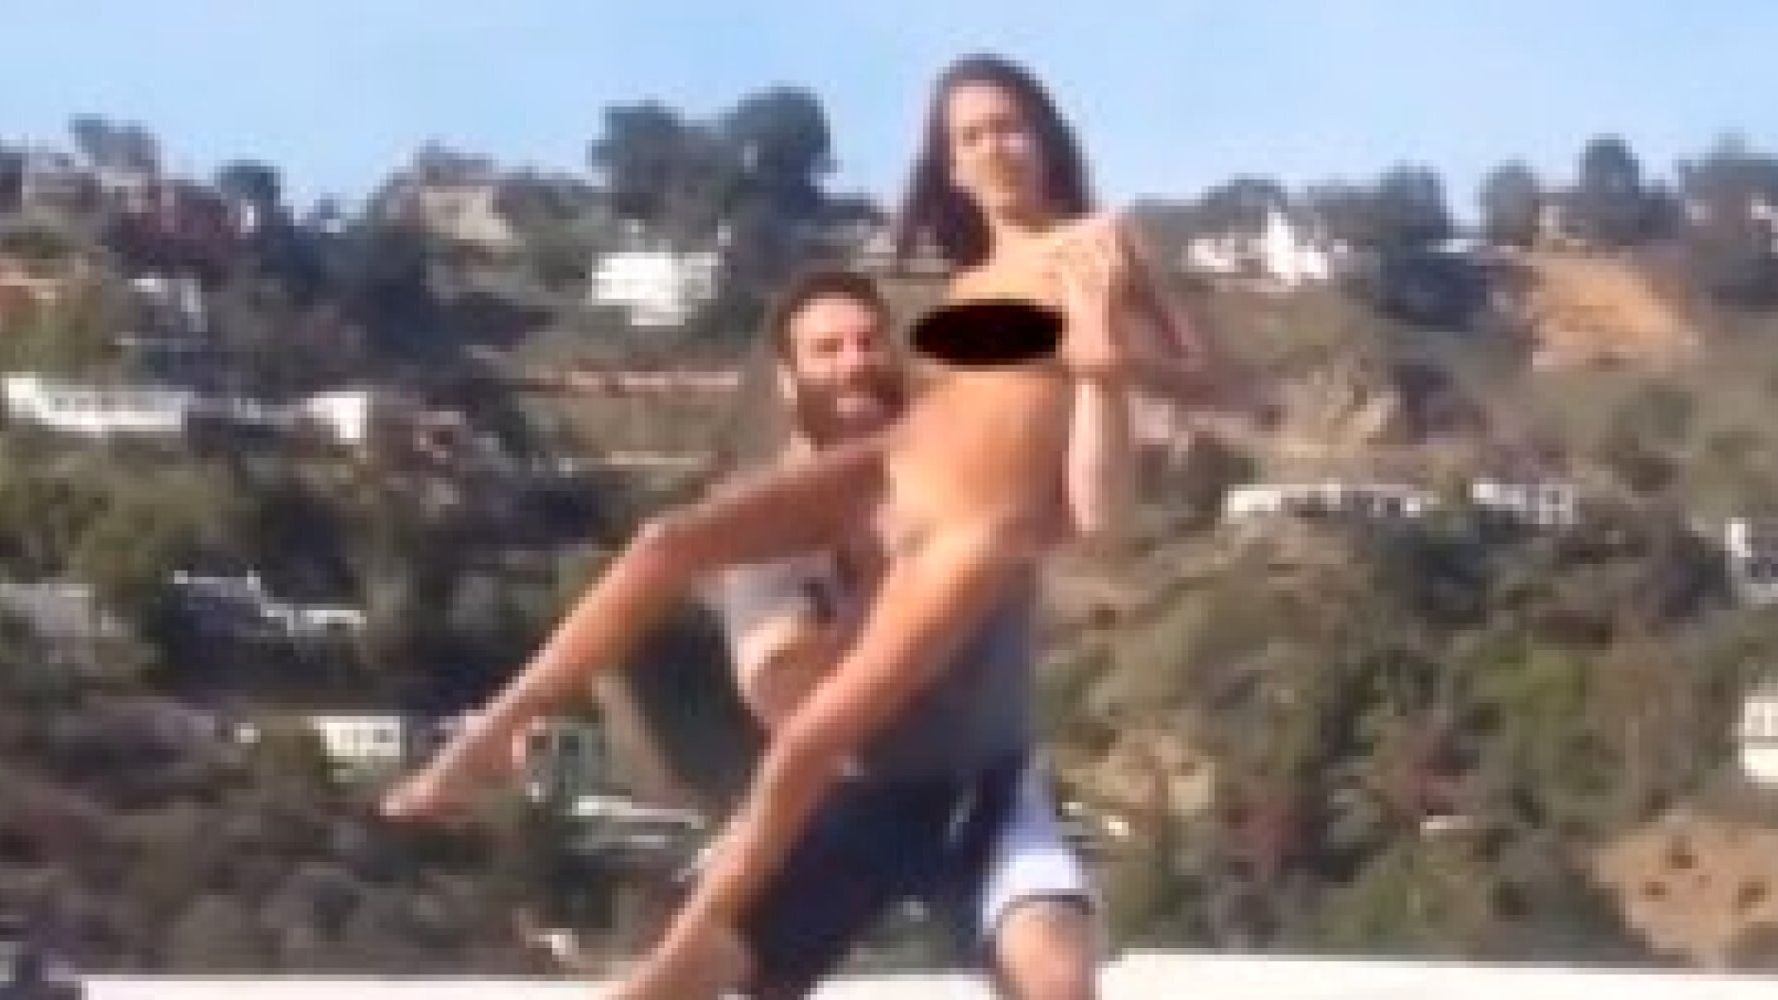 Naked Porn Star Janice Griffith Breaks Foot After Instagram Playboy Dan  Bilzerian Hurls Her Off Roof (VIDEO) | HuffPost UK News